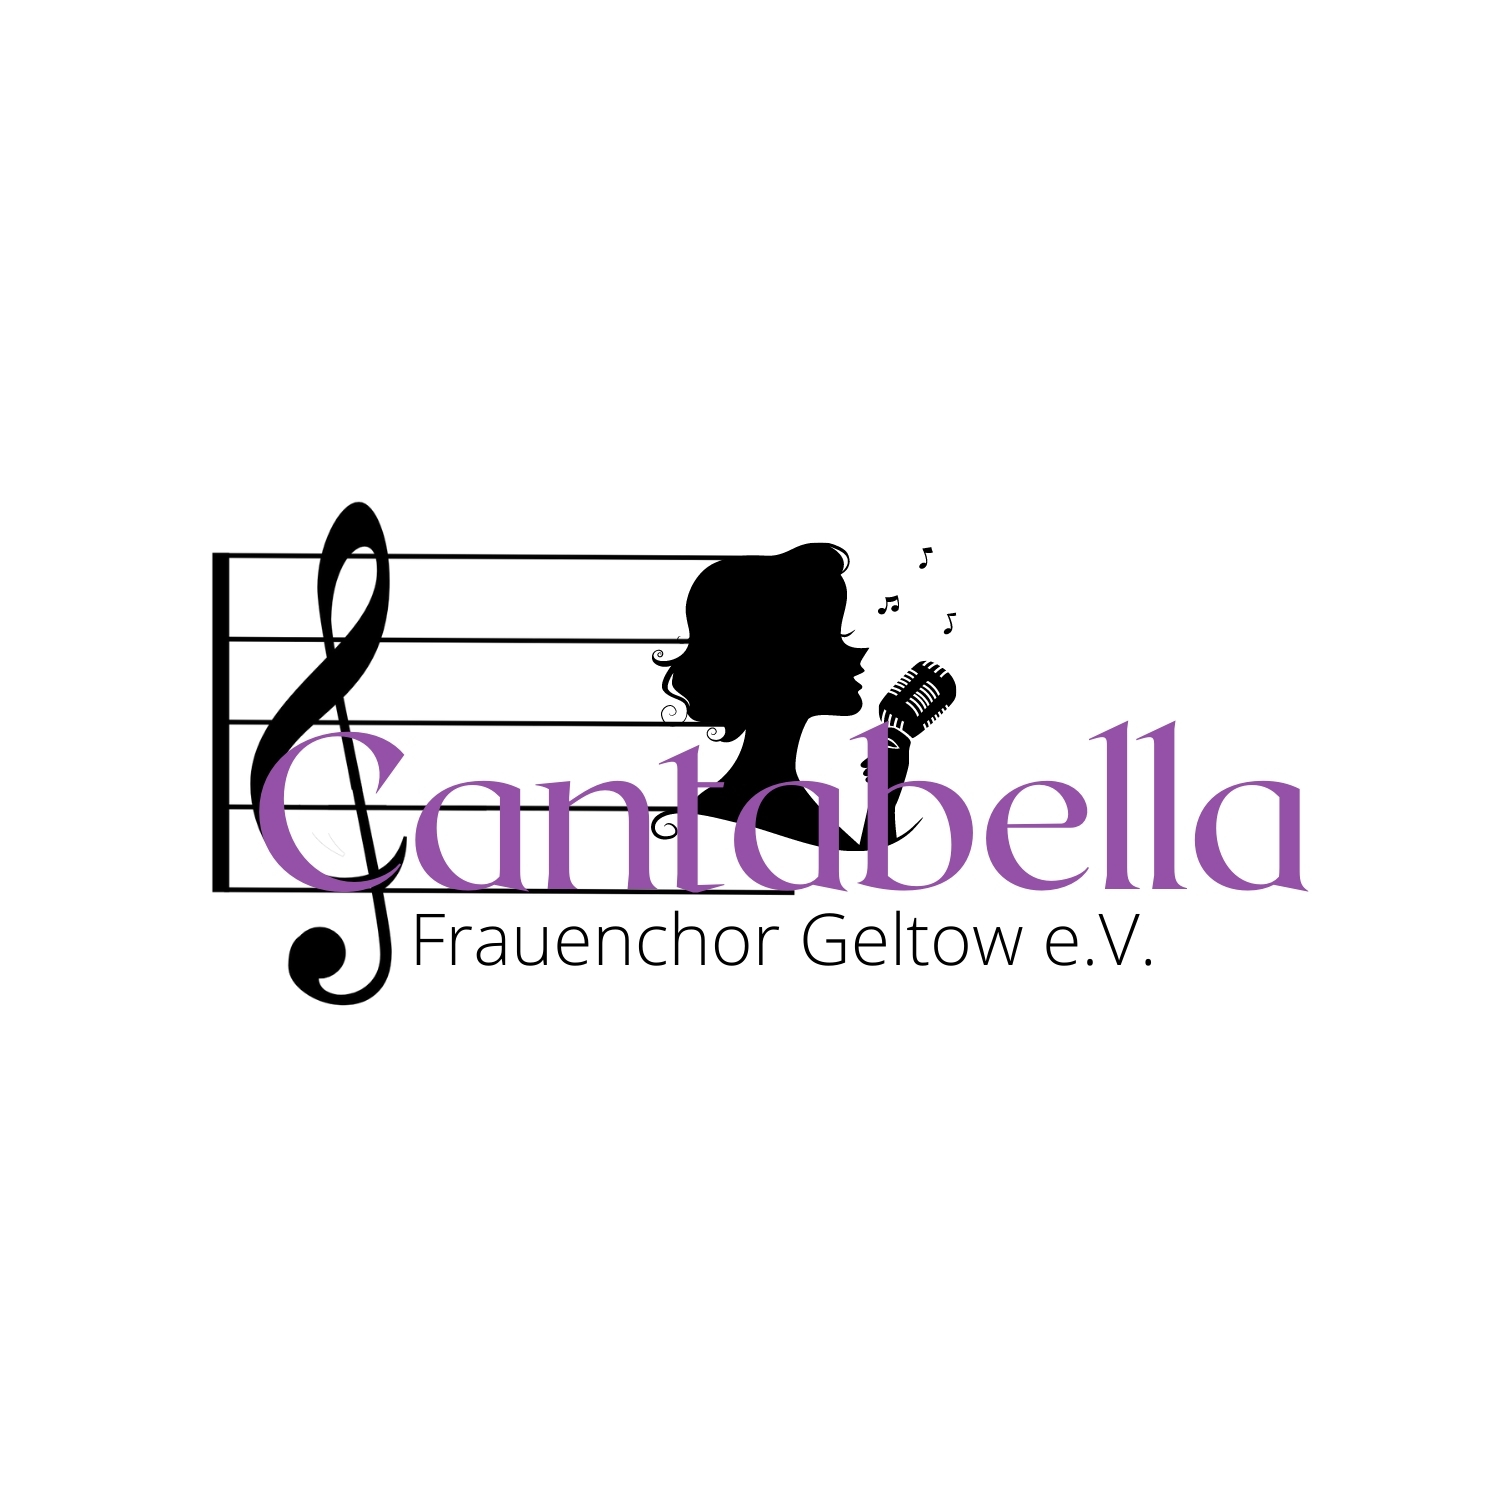 (c) Frauenchor-cantabella.de